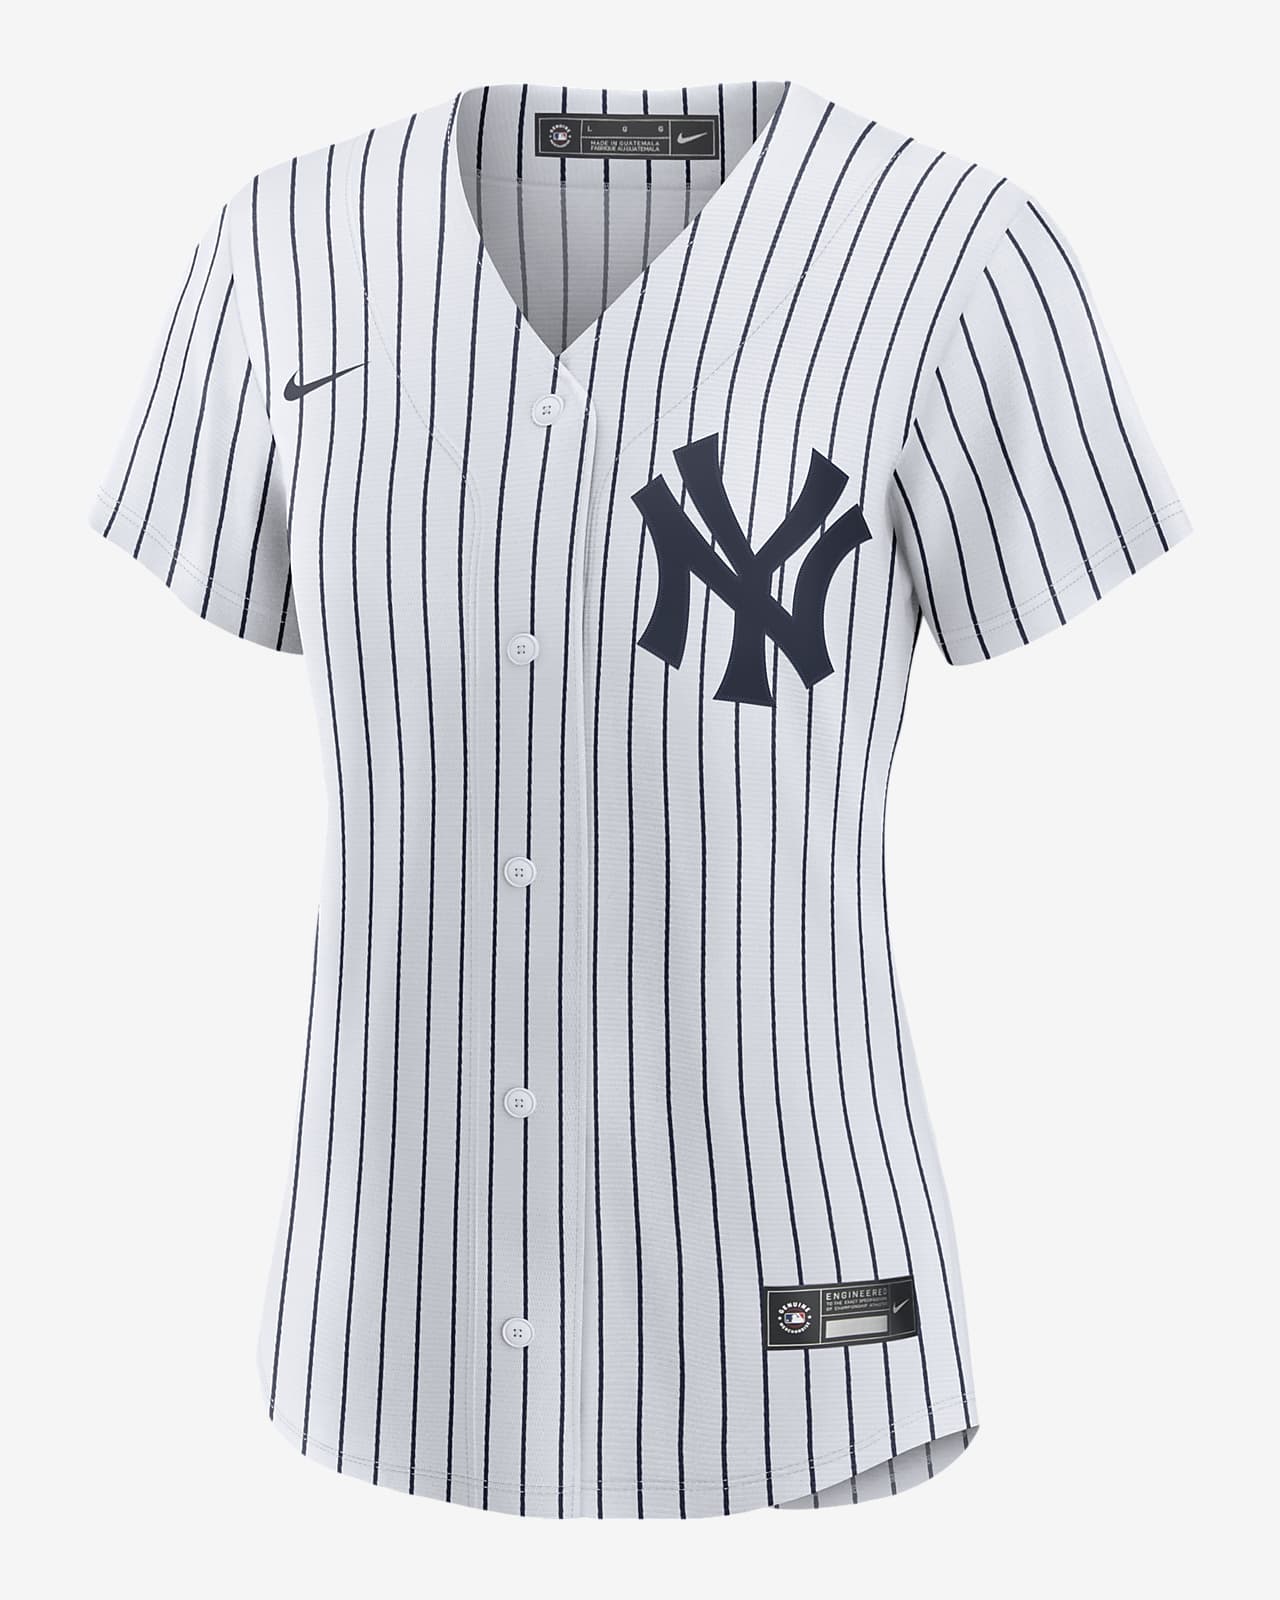 MLB New York Yankees (Derek Jeter) Women's Replica Baseball Jersey